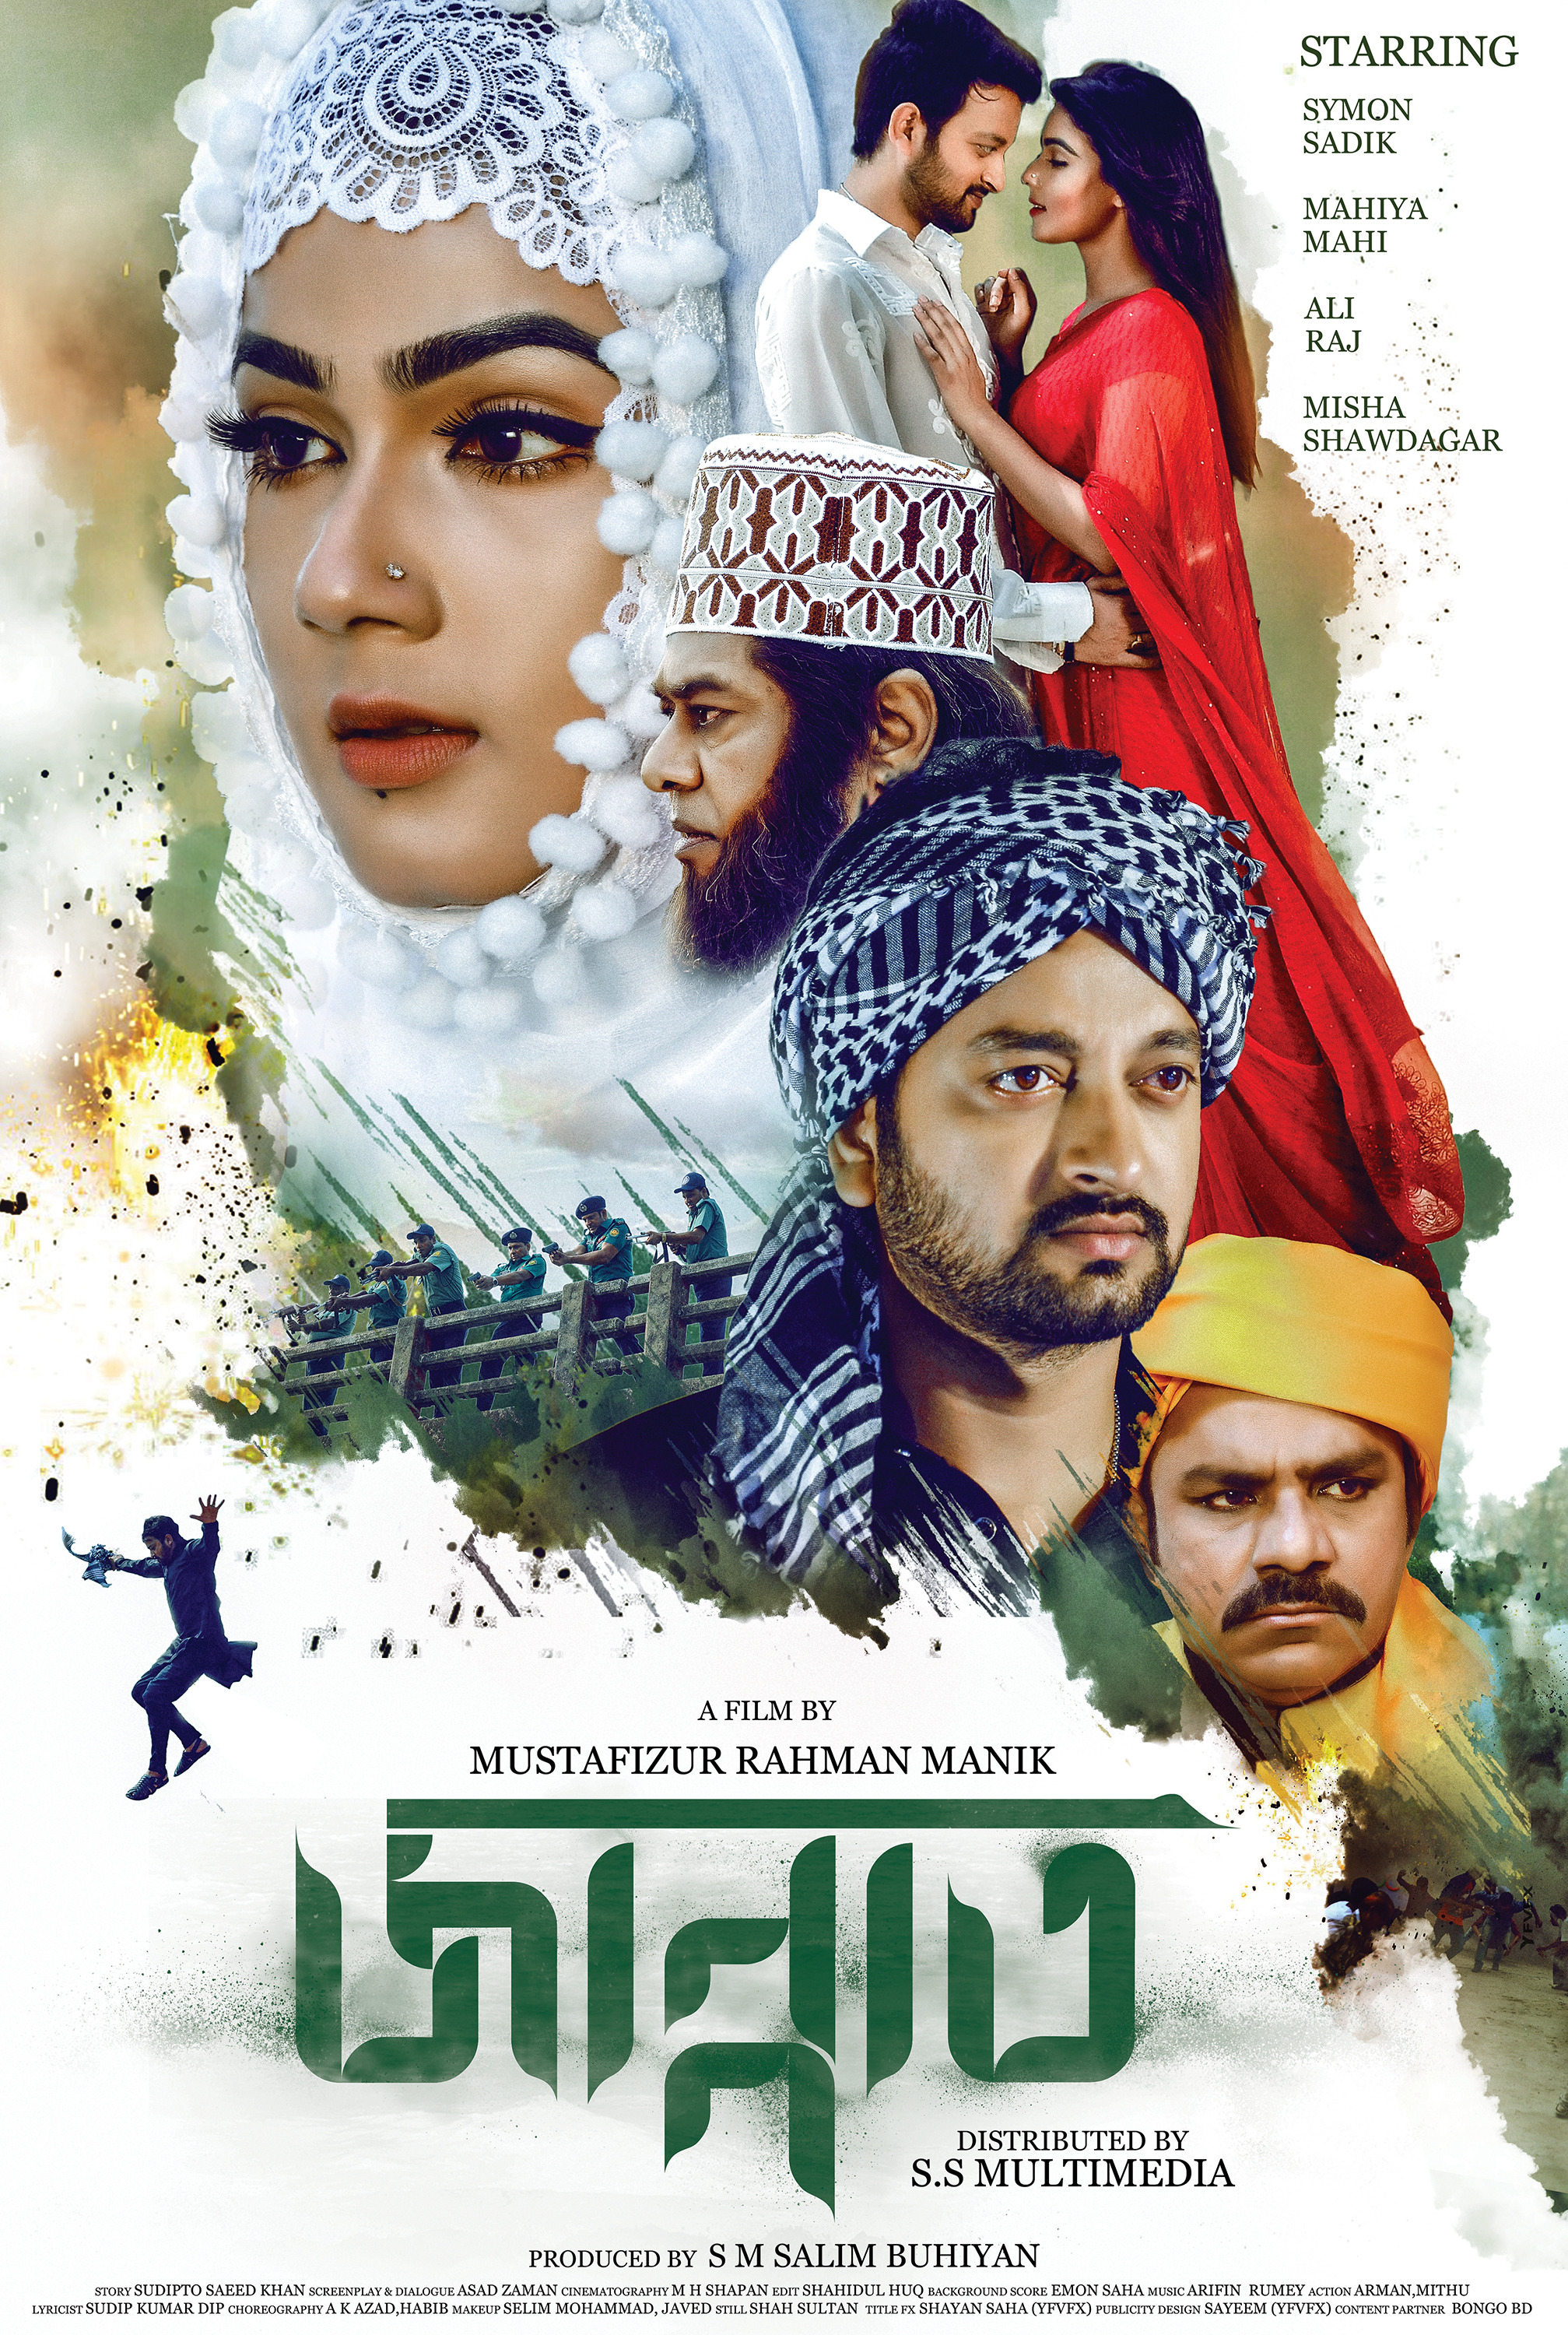 Mega Sized Movie Poster Image for Jannat (#3 of 10)